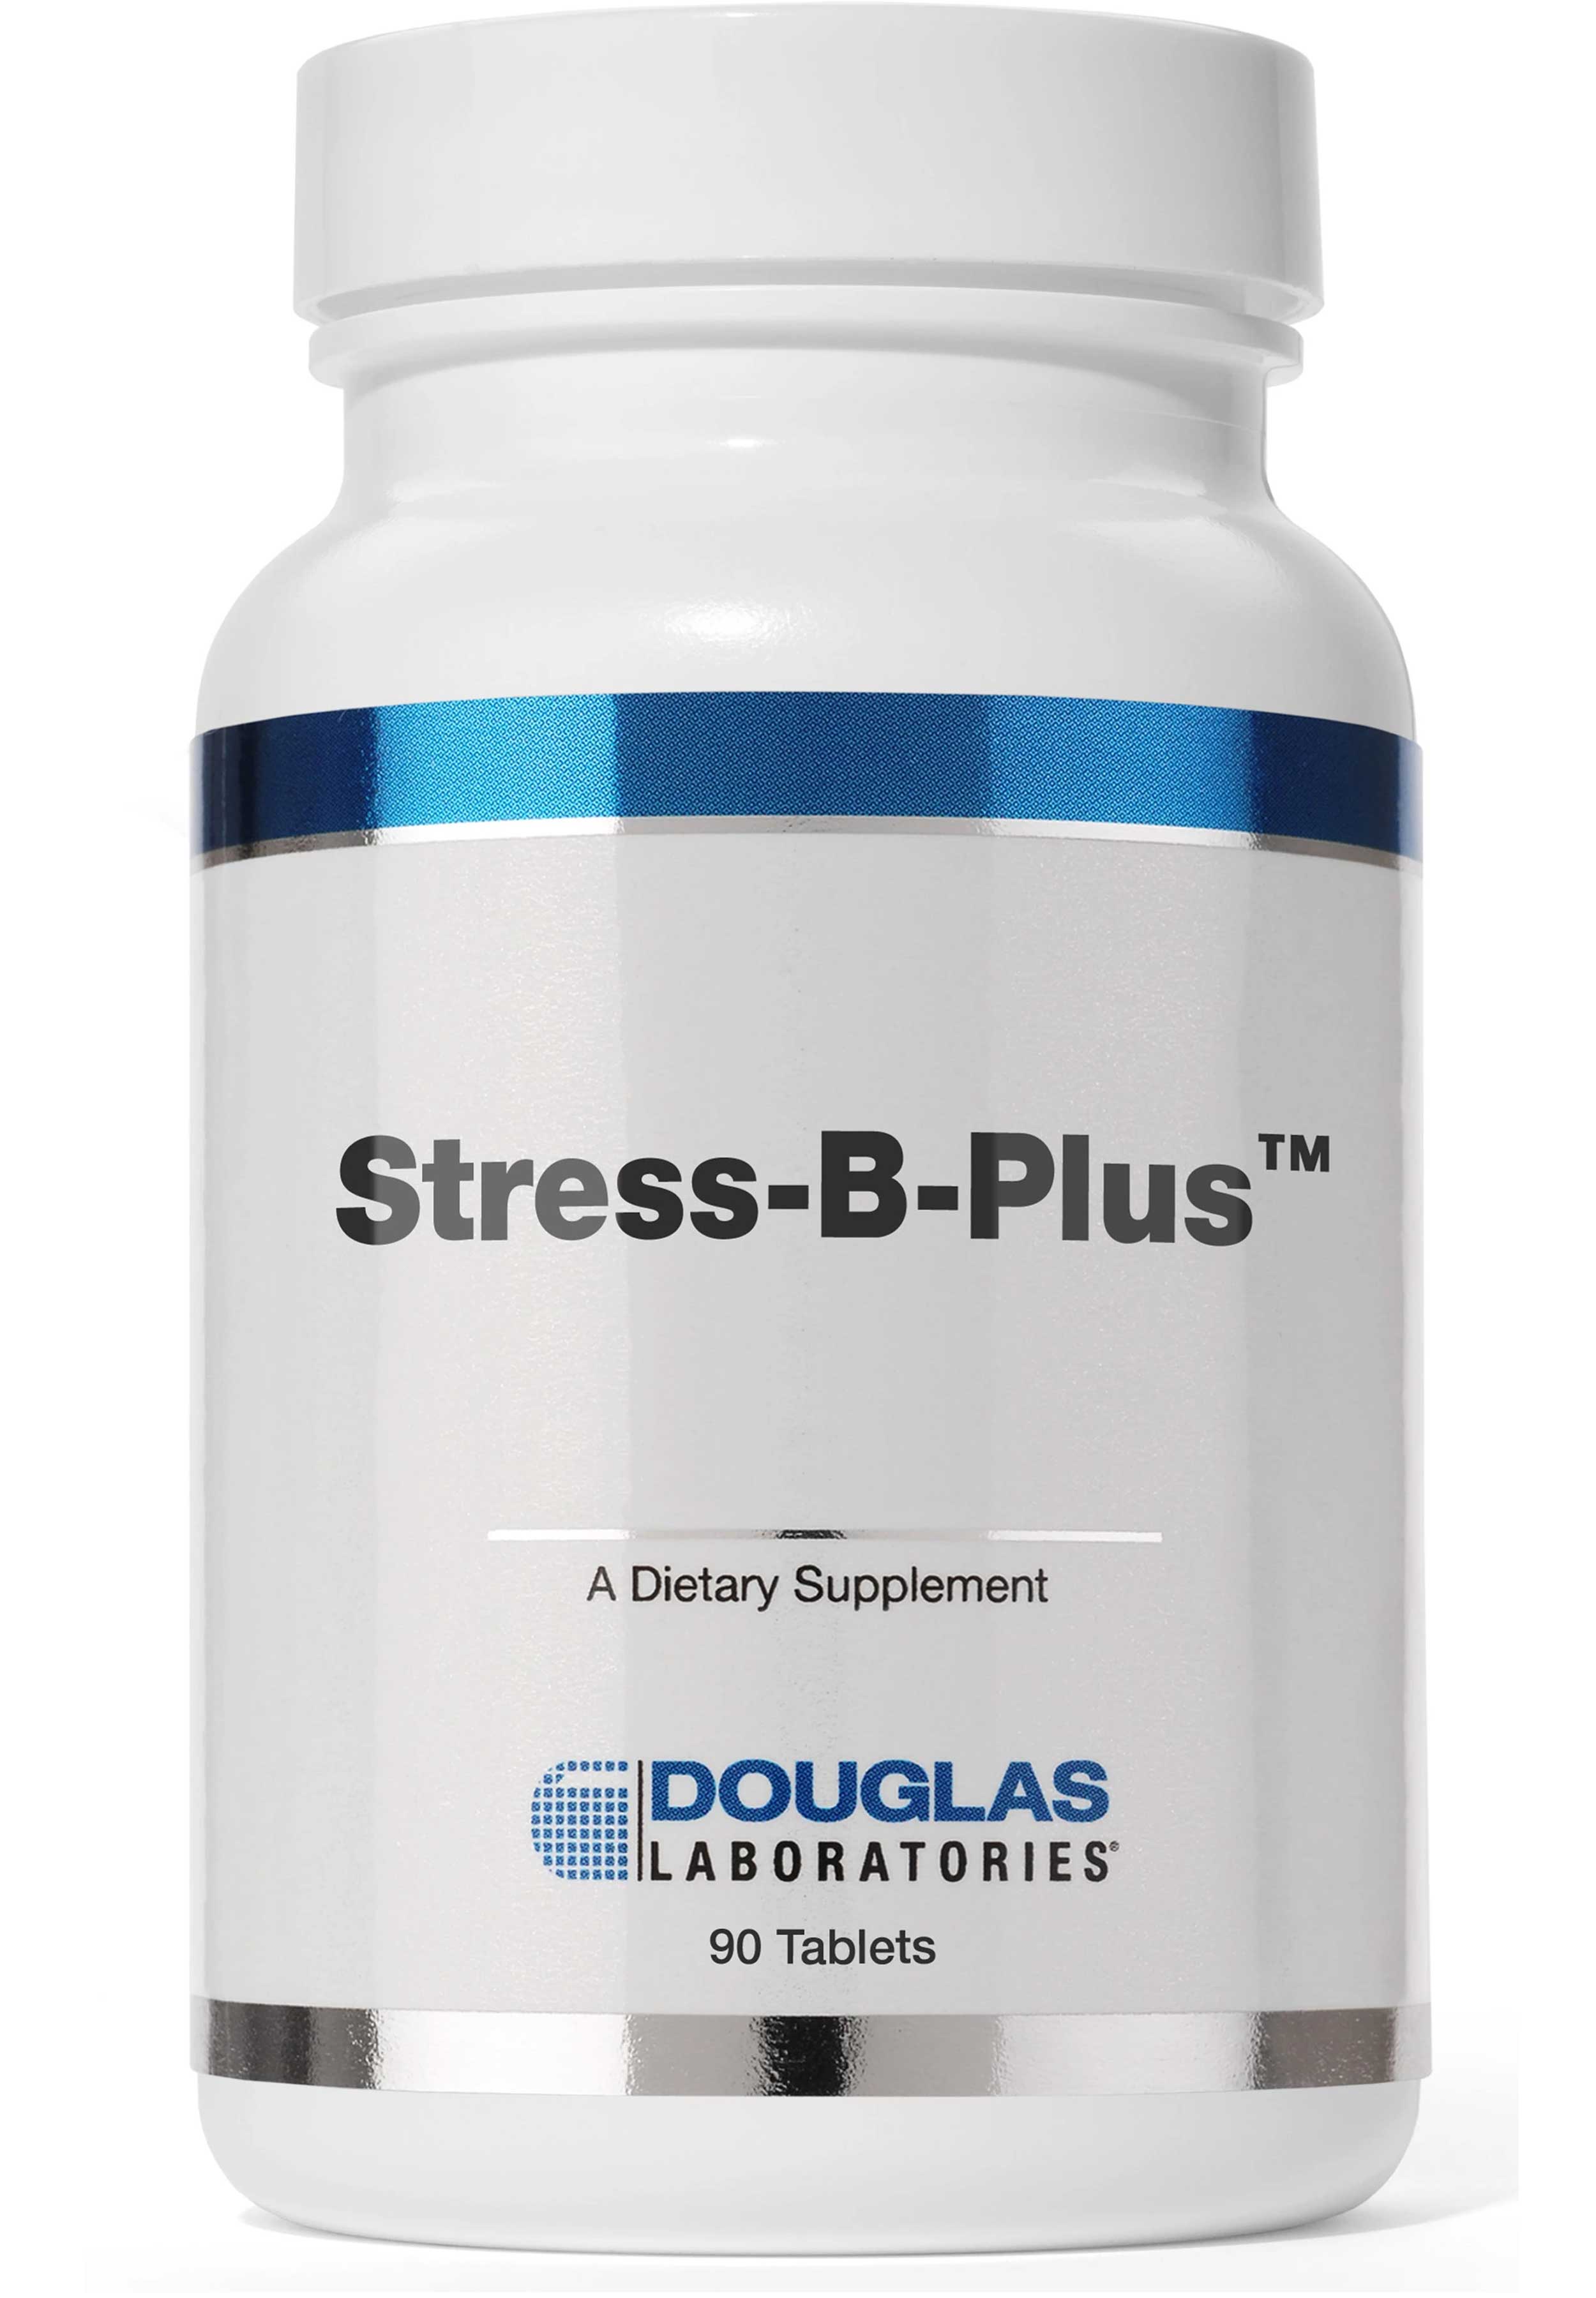 Douglas Laboratories Stress-B-Plus